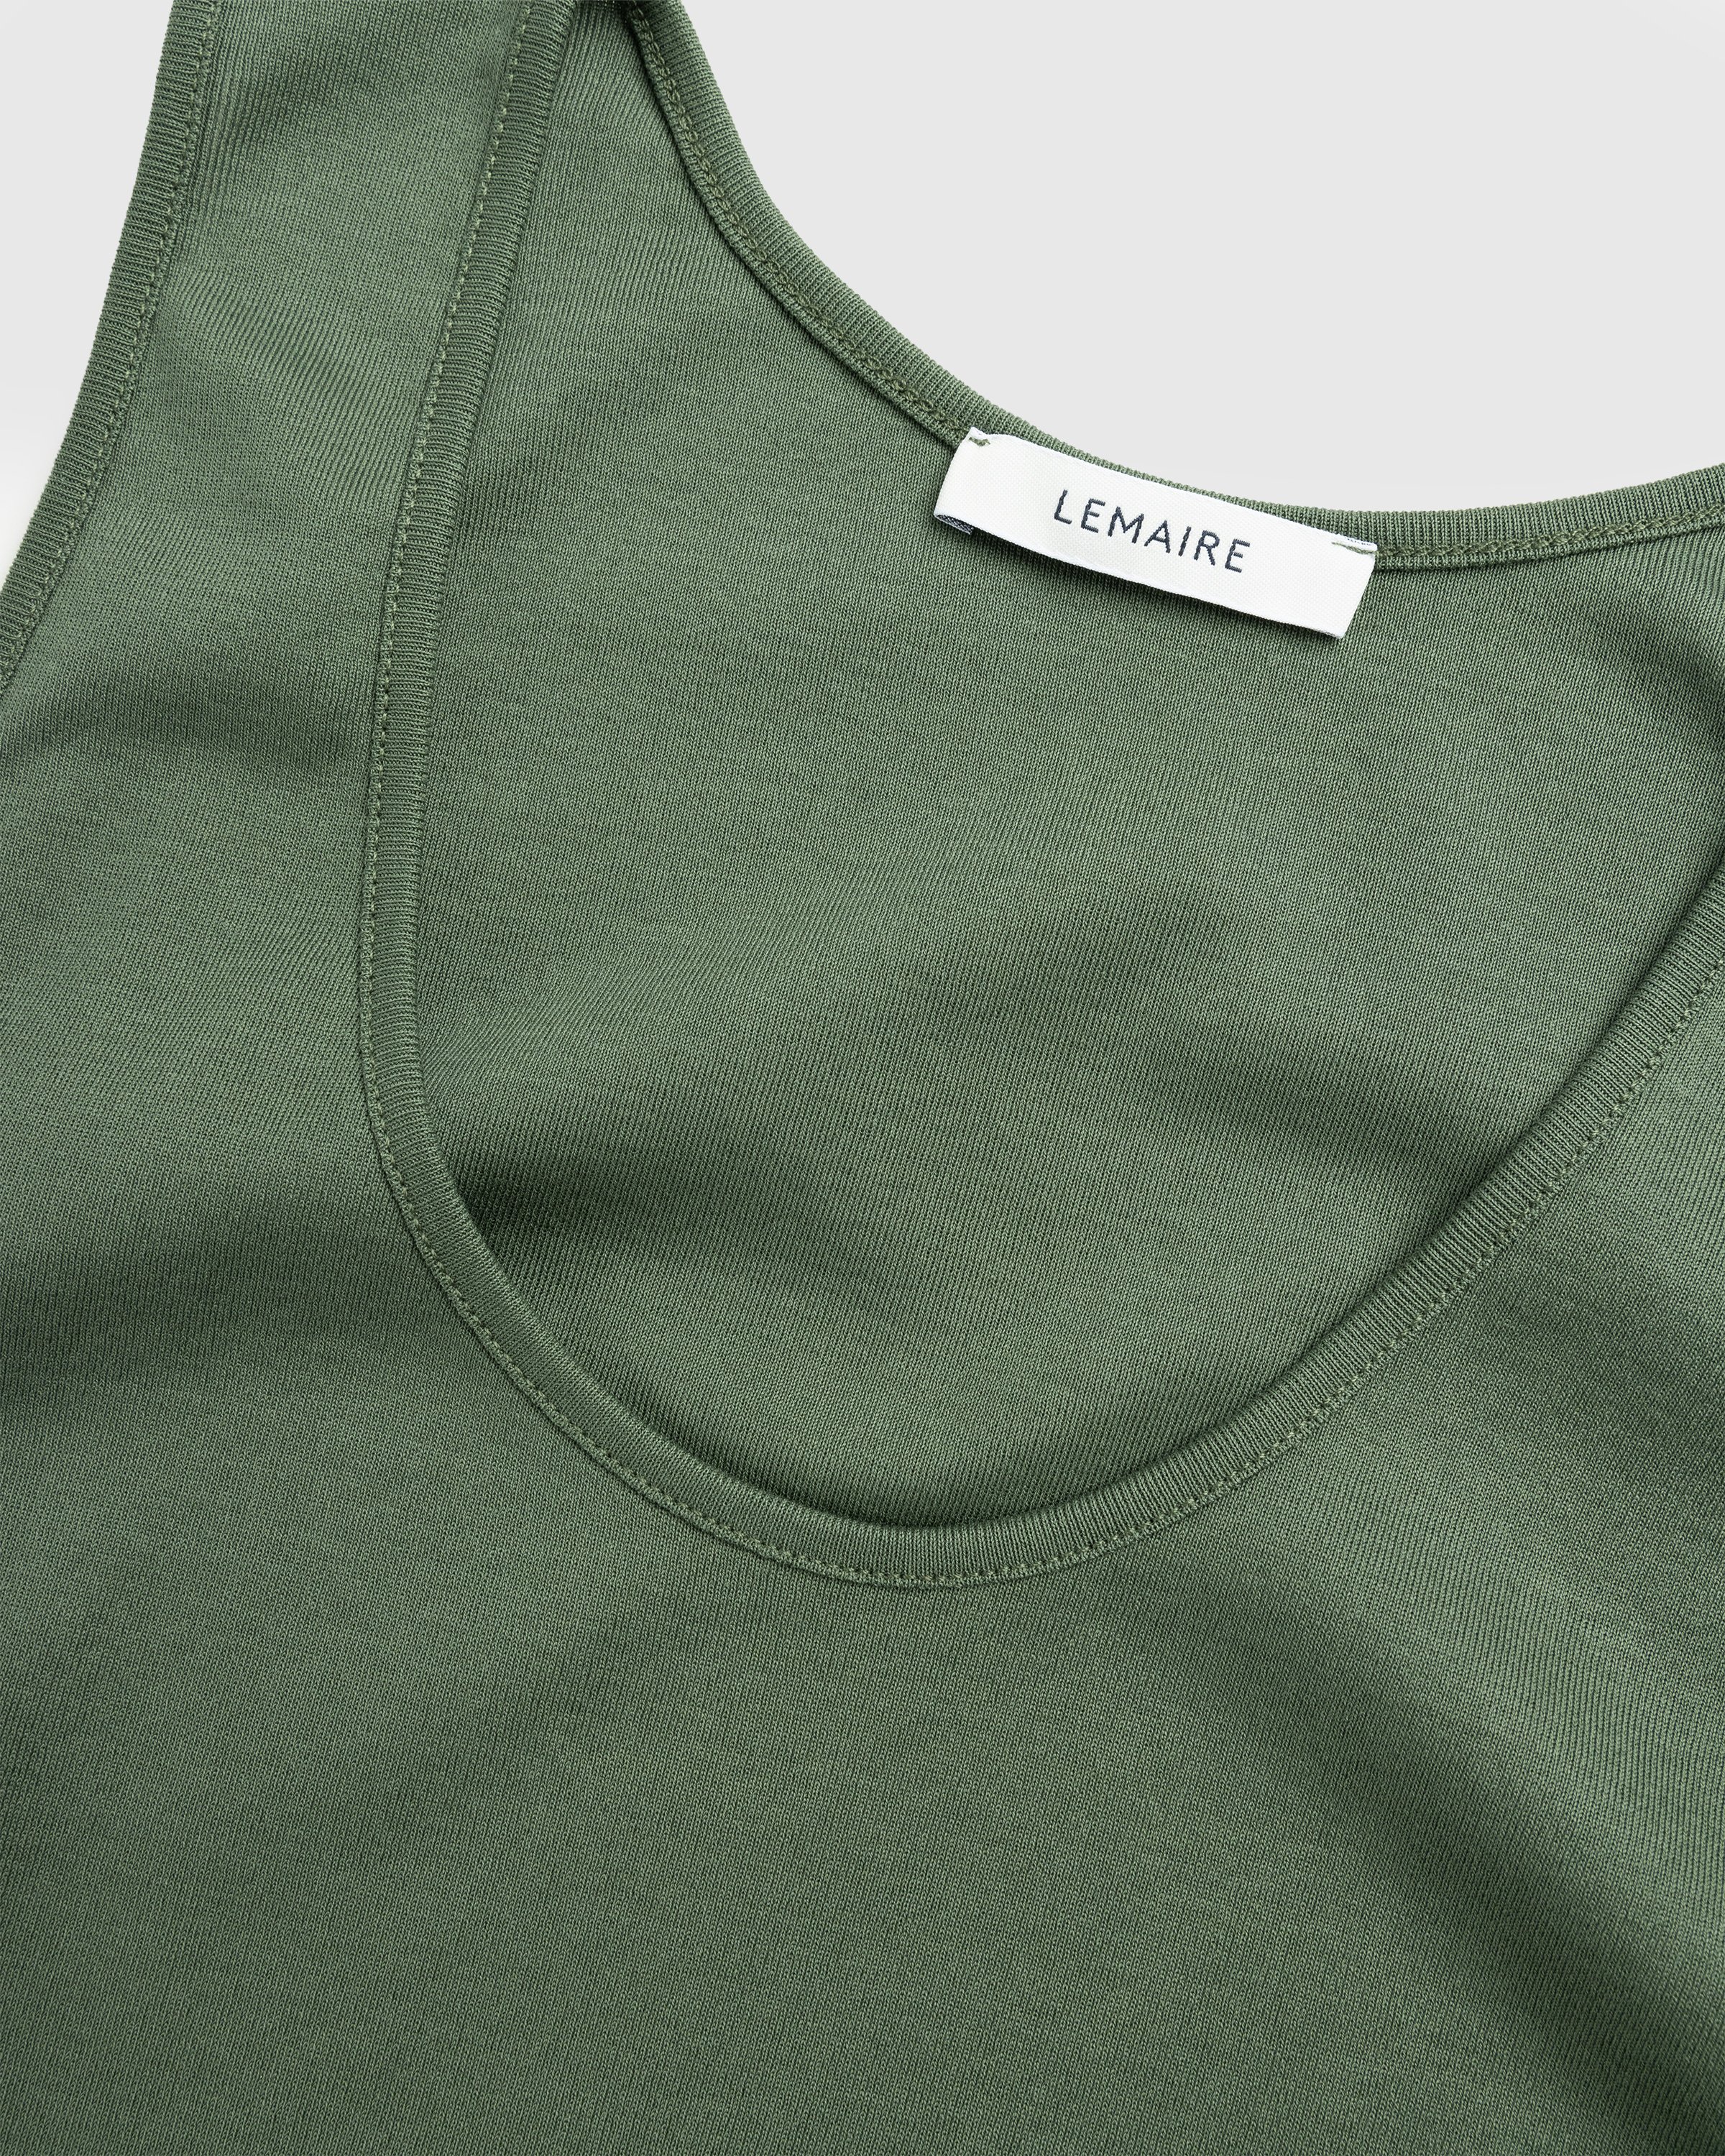 Lemaire - RIB DEBARDEUR Green - Clothing - Green - Image 6